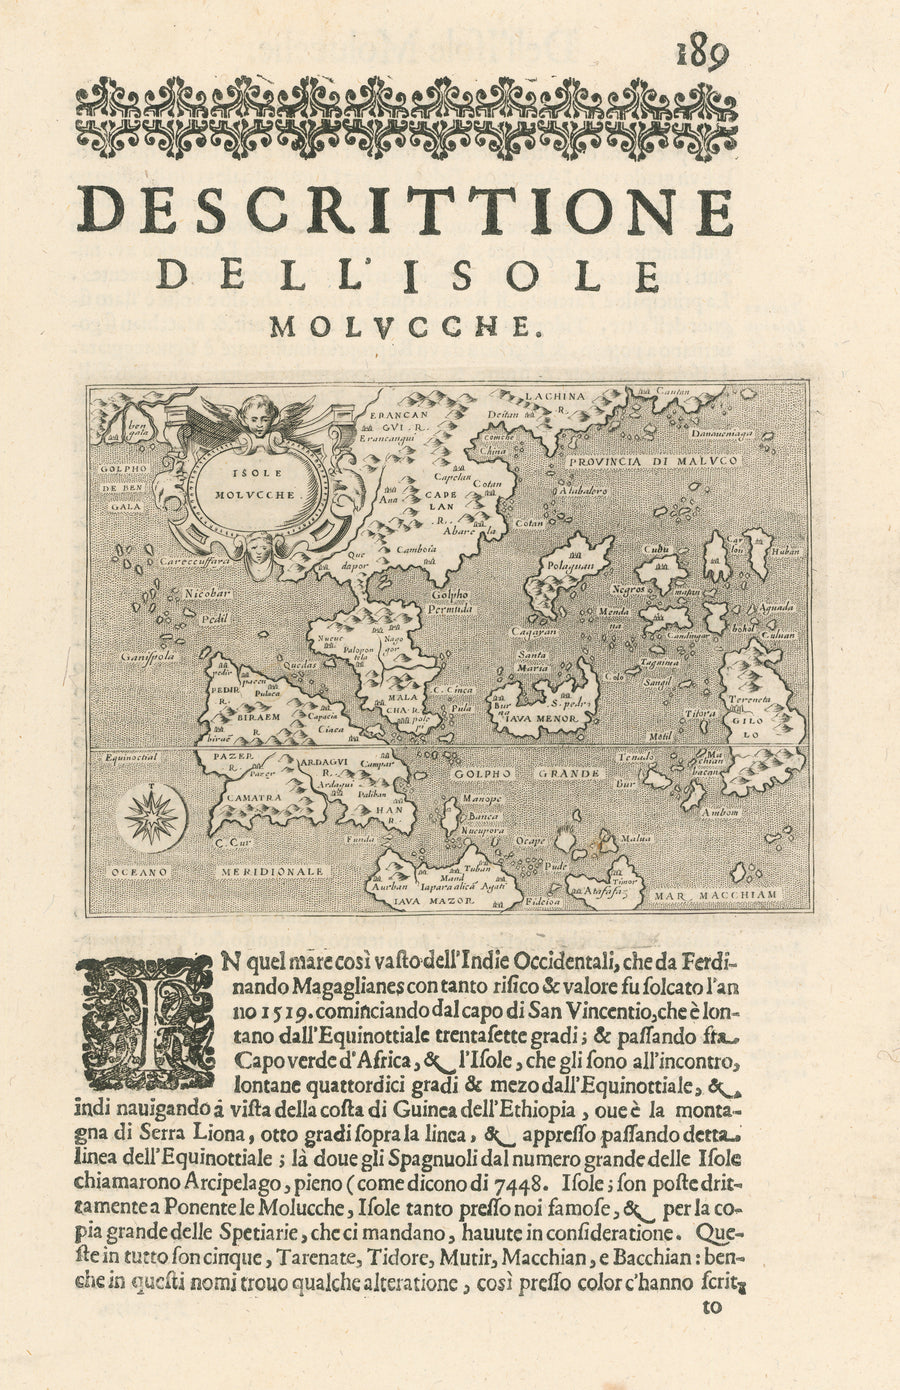 Antique Map of Southeast Asia: Descrittione de ll'isole Molucche by Porcacchi, 1576